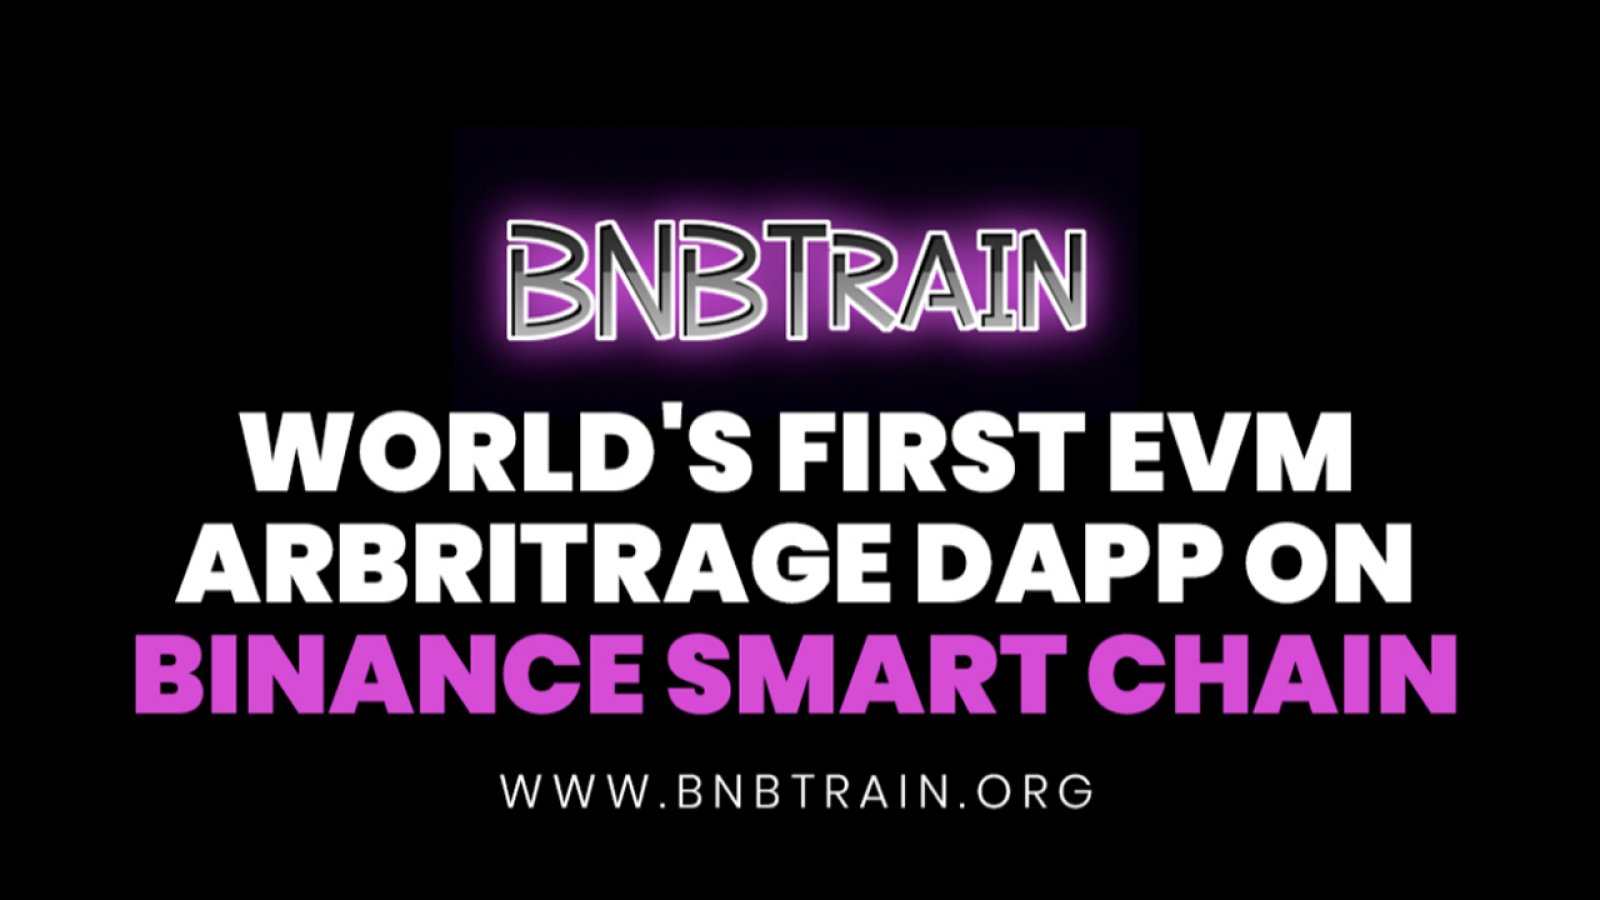 BNB Train Brings World's First EVM Arbitrage Dapp on Binance Smart Chain